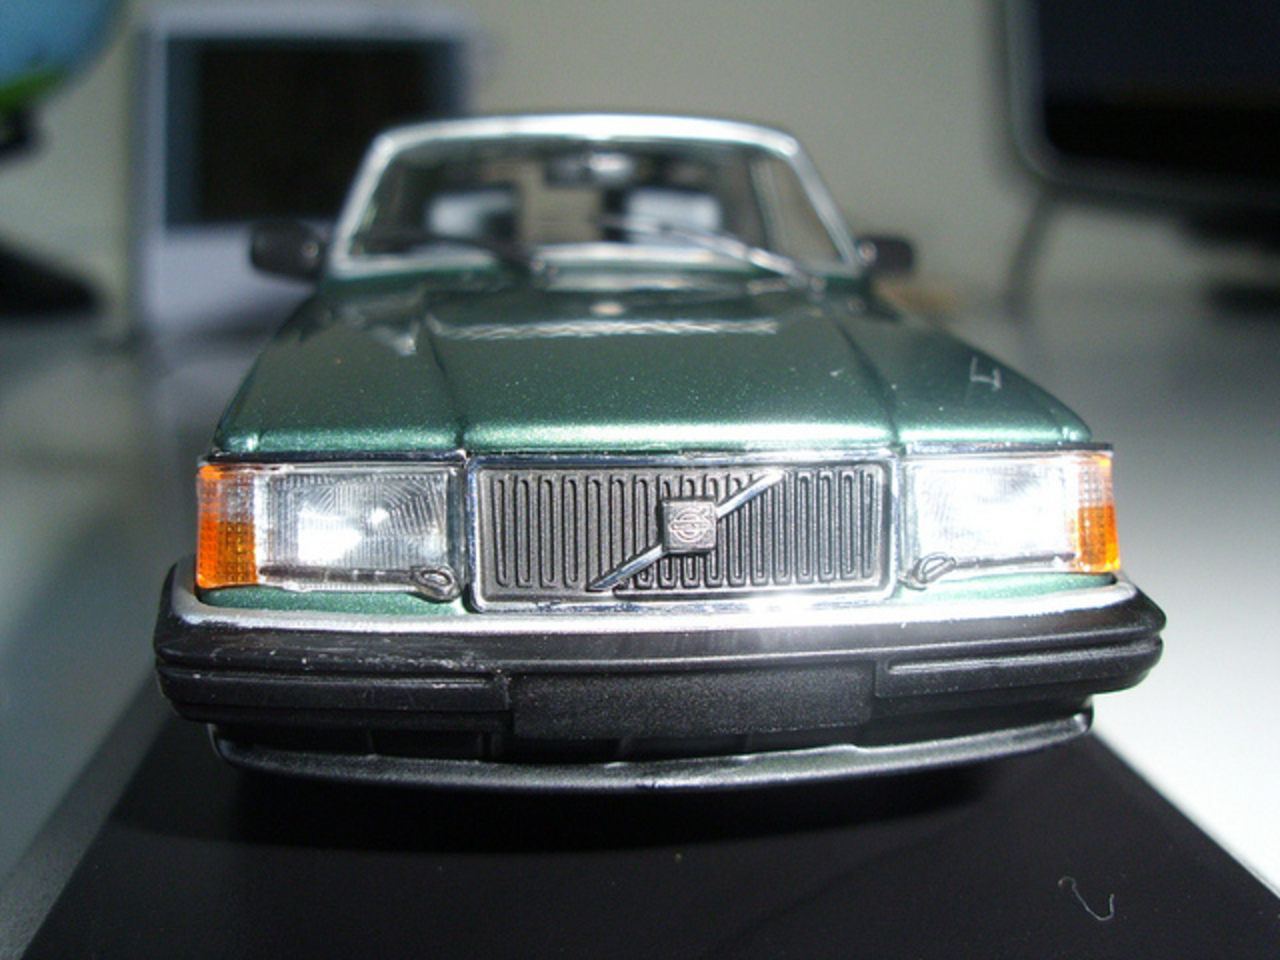 1/43 Volvo 240 GLE Minichamps Green | Flickr - Photo Sharing!